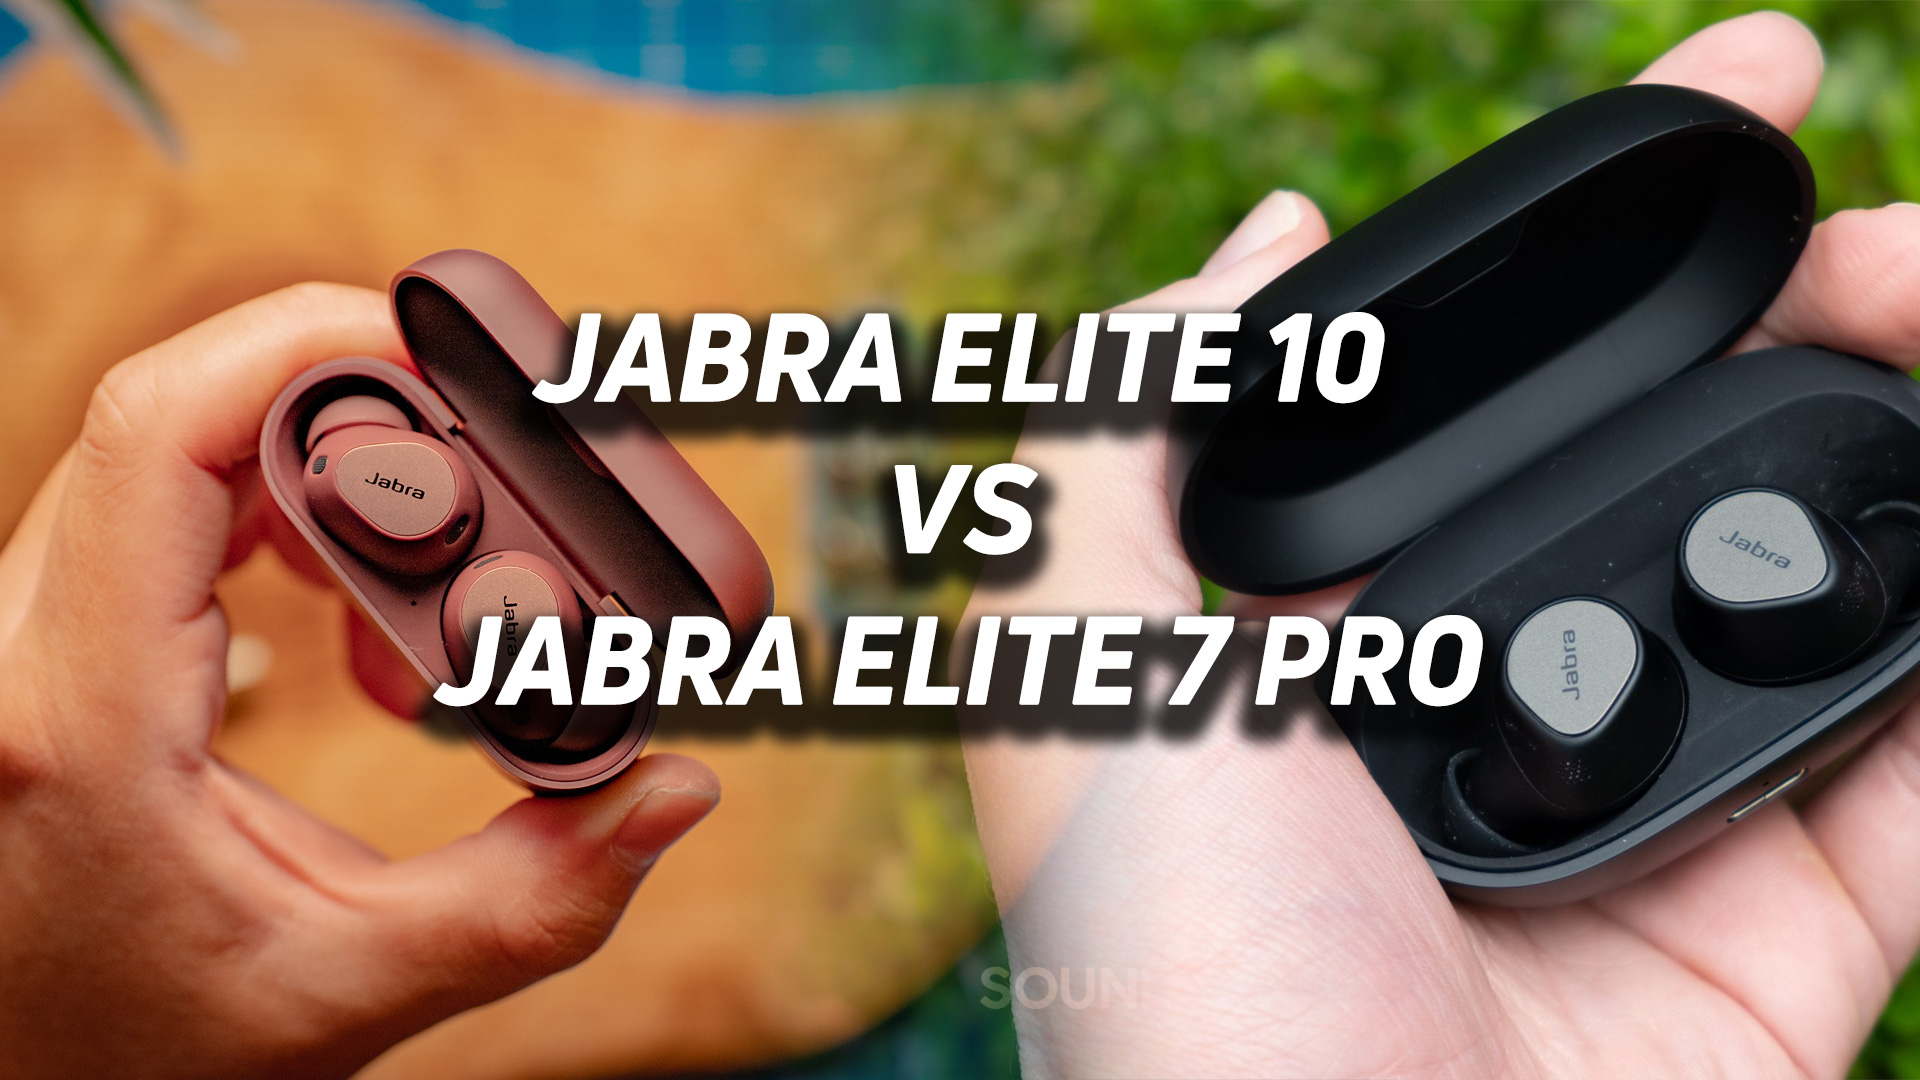 Jabra Elite 10 vs Jabra Elite 7 Pro